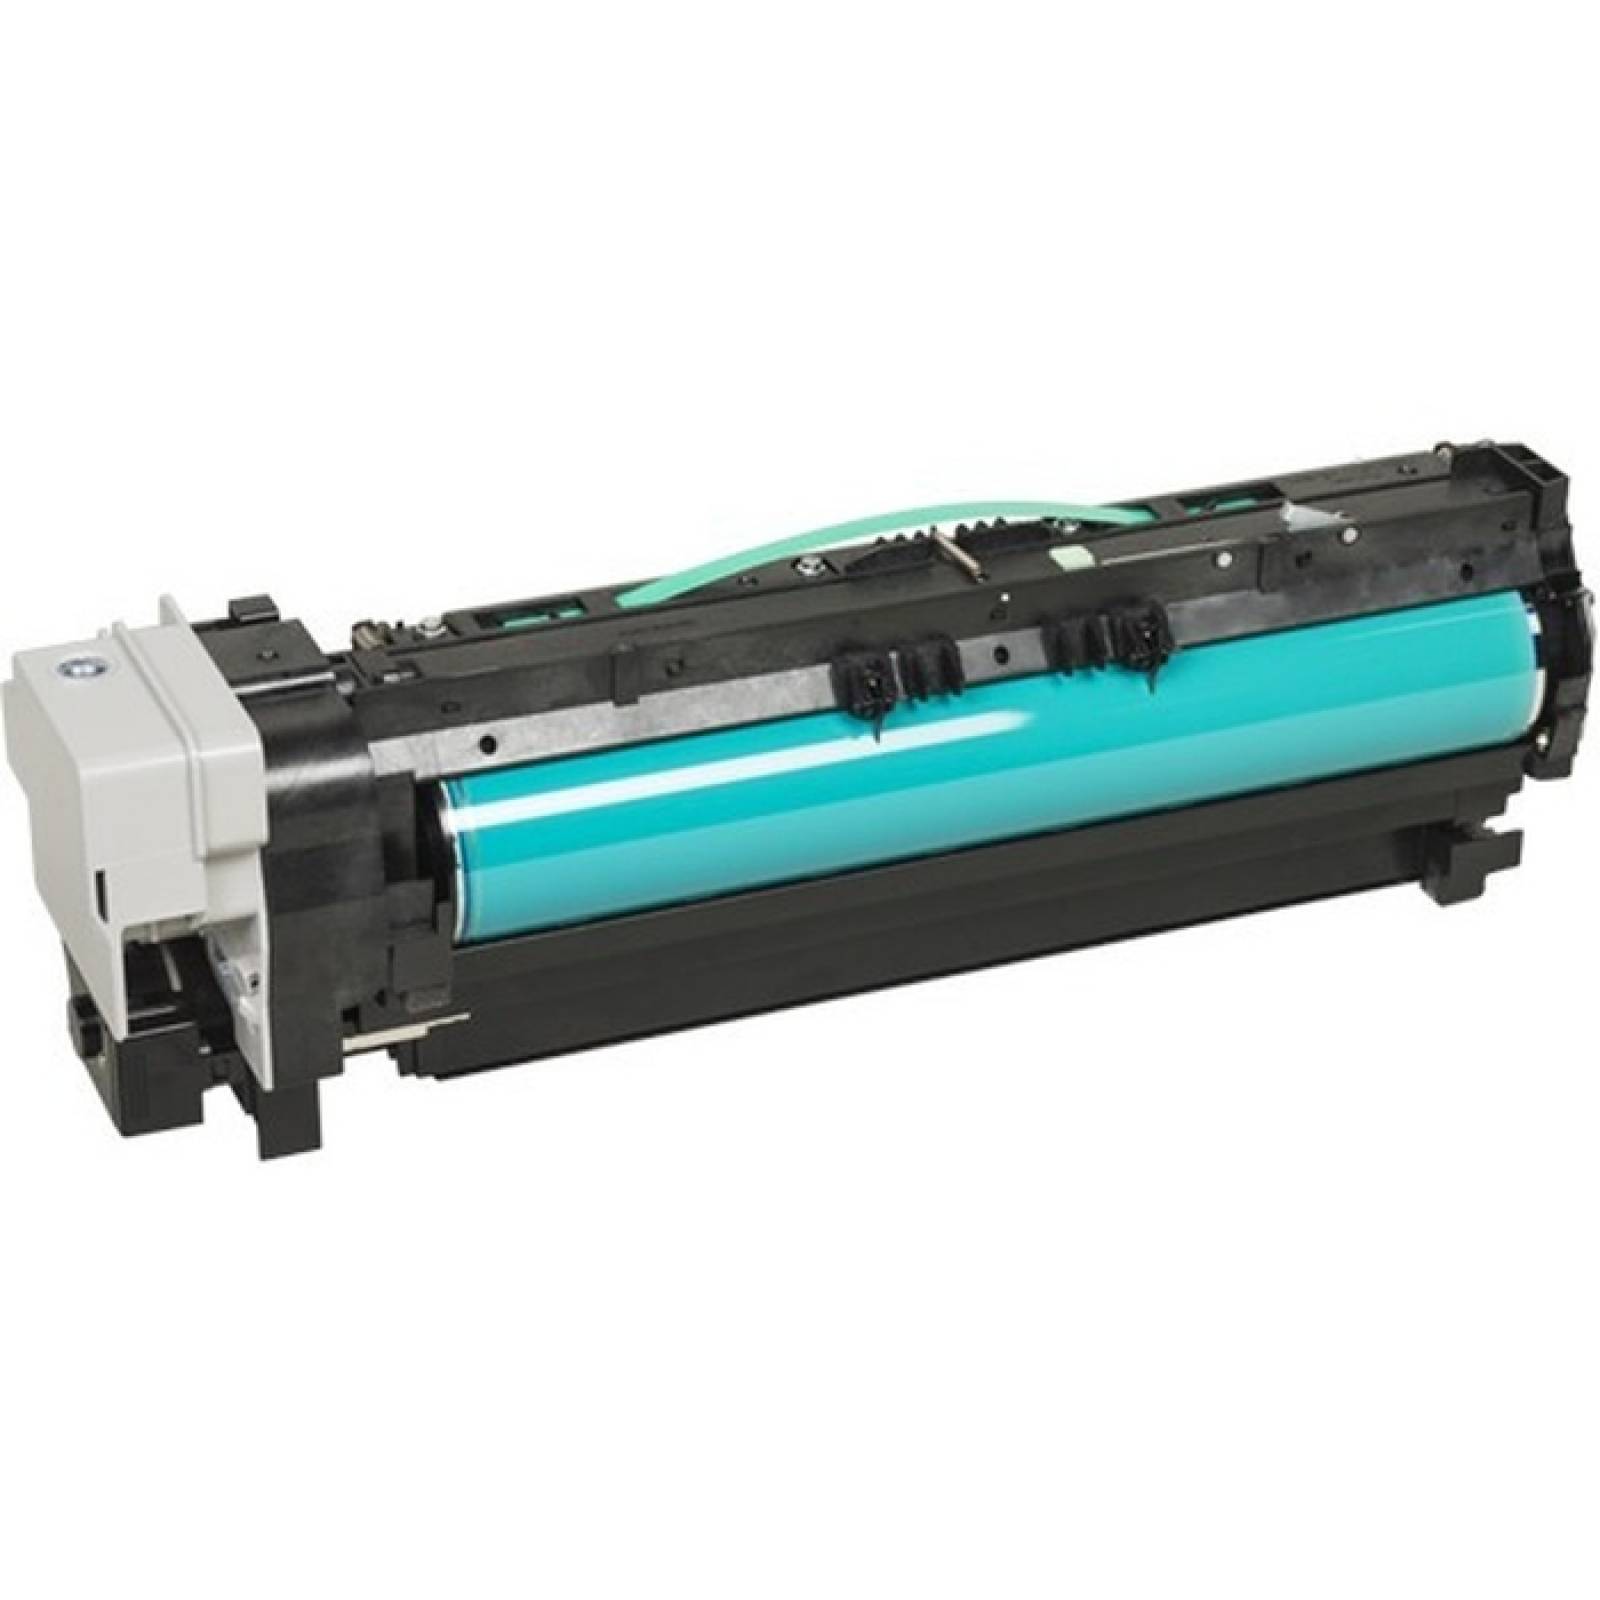 Kit de mantenimiento Ricoh Type SP 8200 A para impresoras lser Aficio SP 8200DN